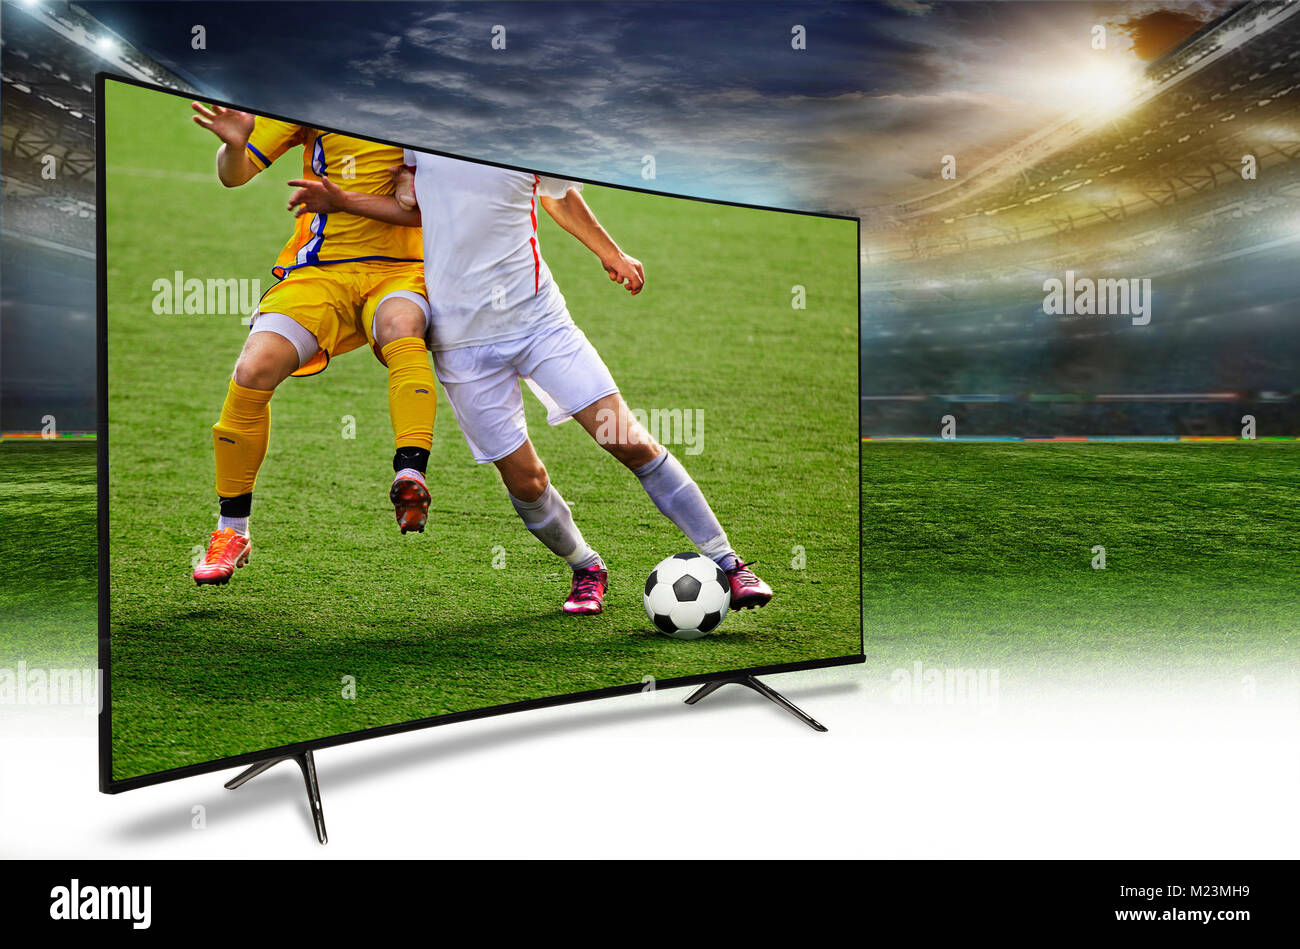 Moniteur 4k smart tv regarder la traduction de match de football Photo  Stock - Alamy